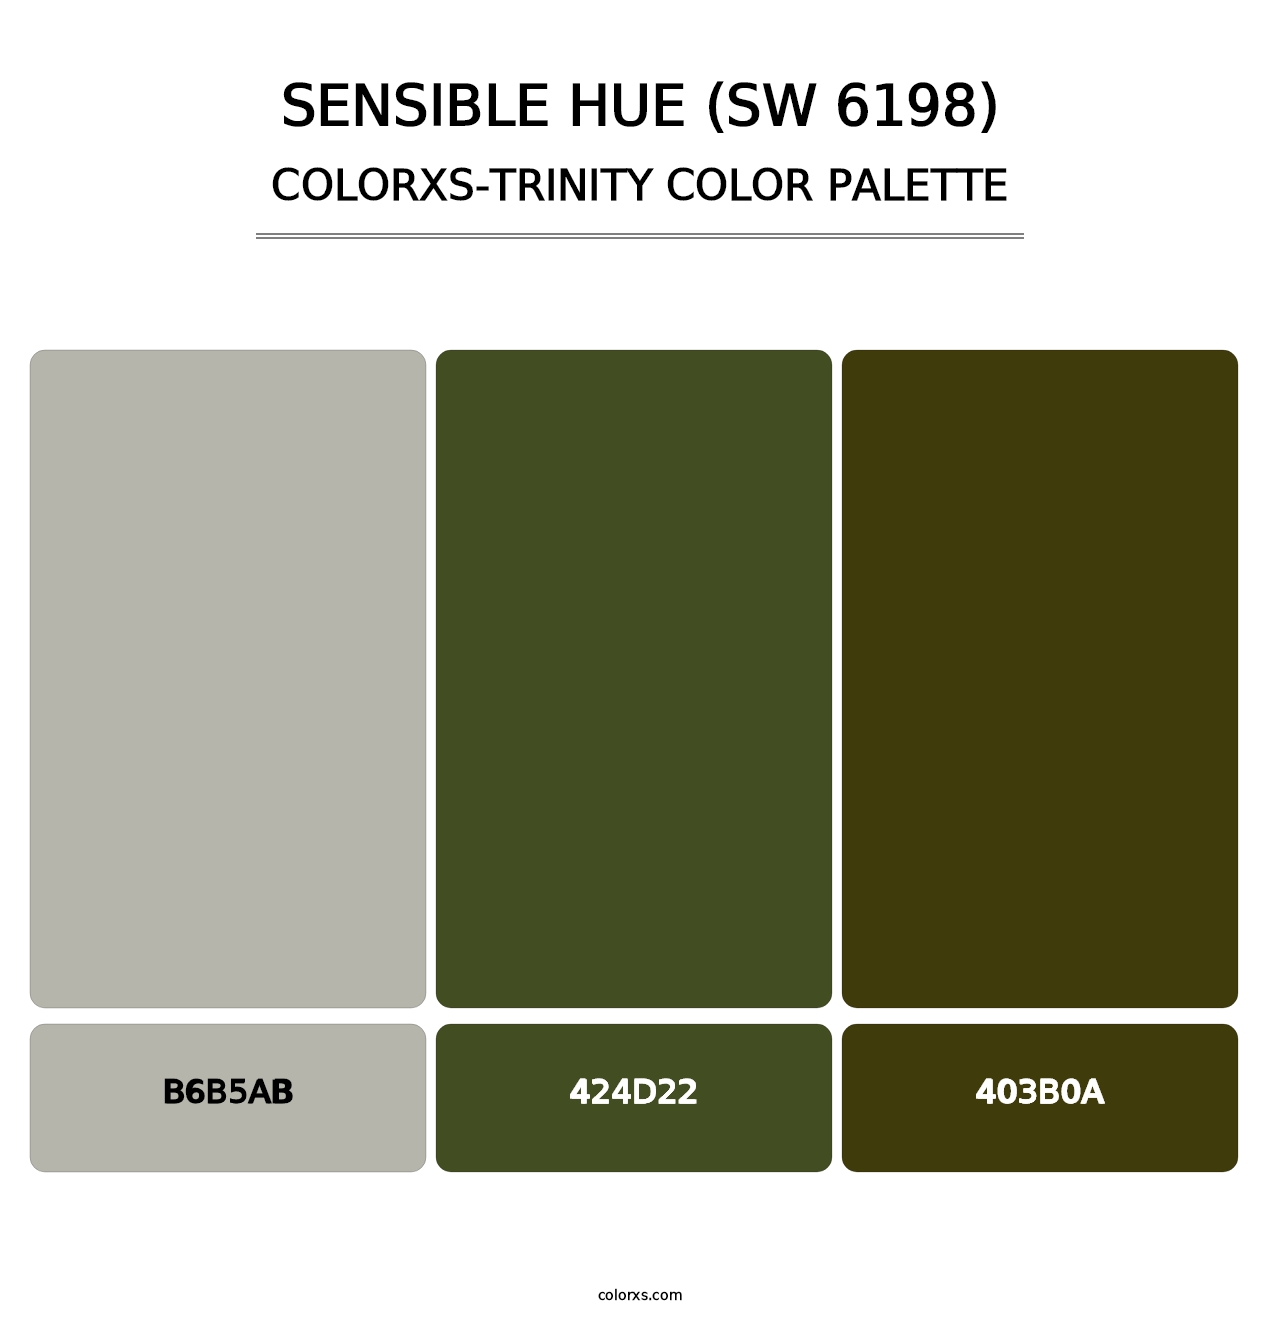 Sensible Hue (SW 6198) - Colorxs Trinity Palette